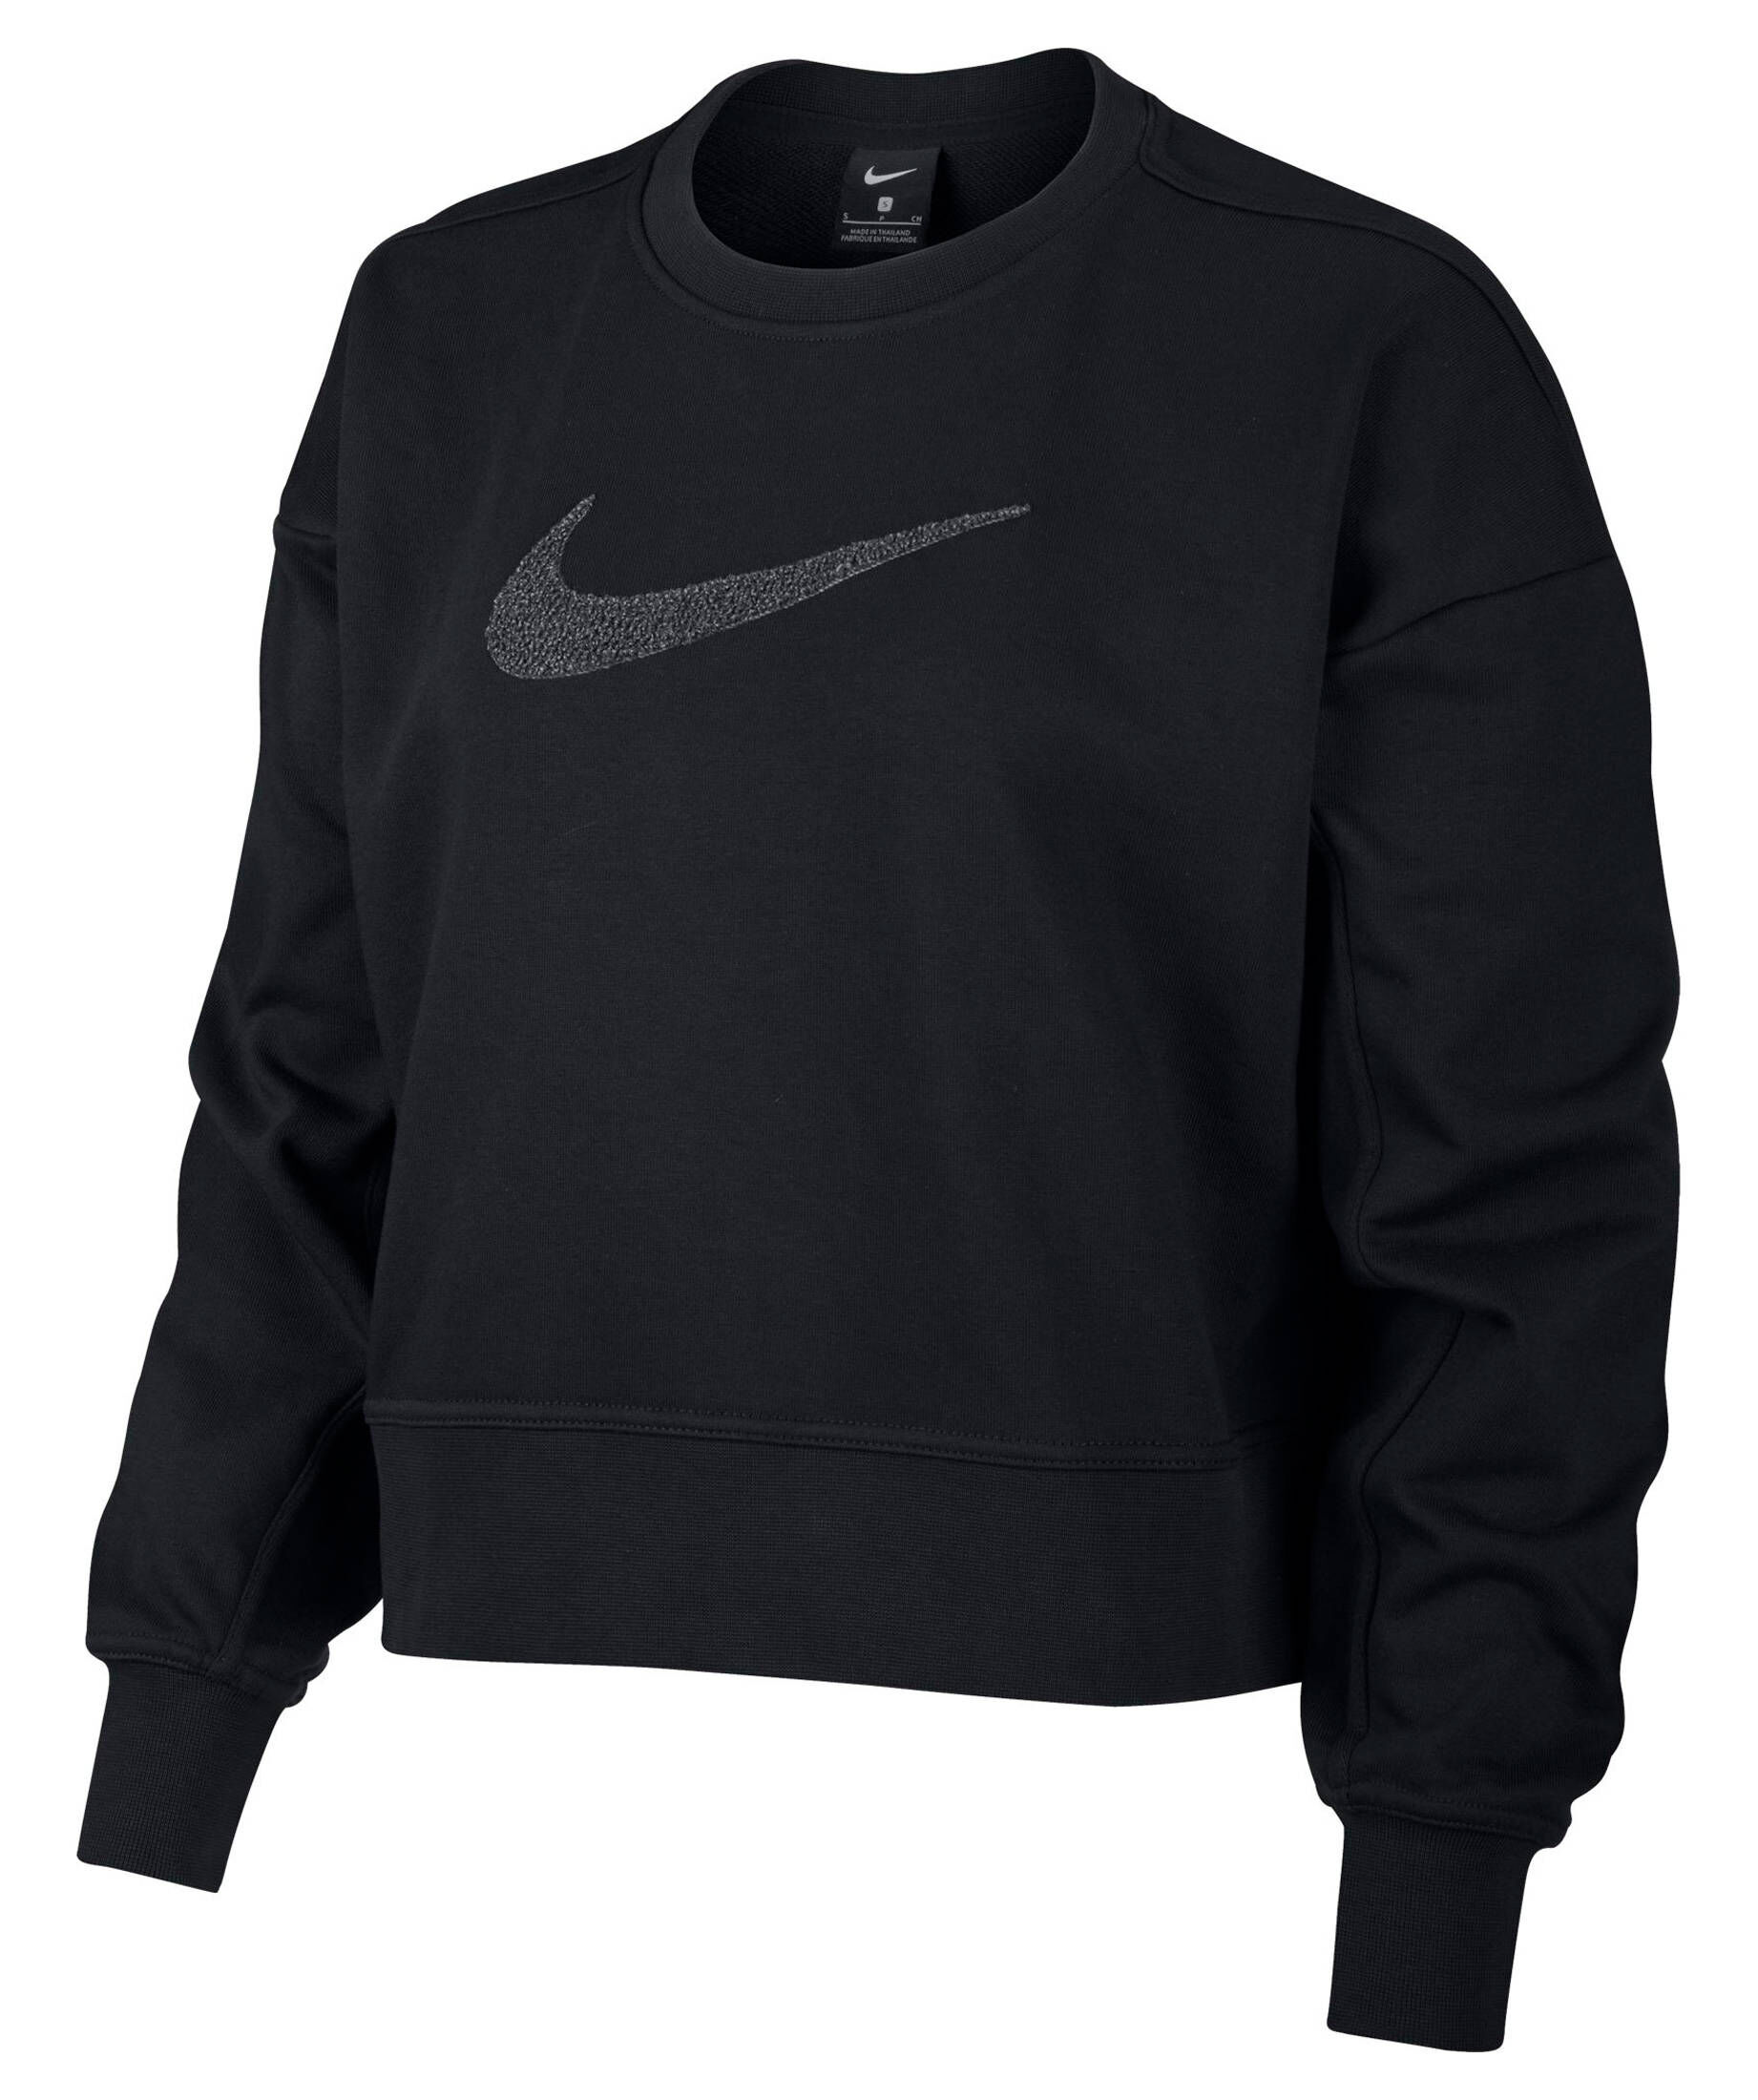 Disfraces Volar cometa Cuota Nike Damen Sweatshirt "Dri-Fit Gel" kaufen | engelhorn